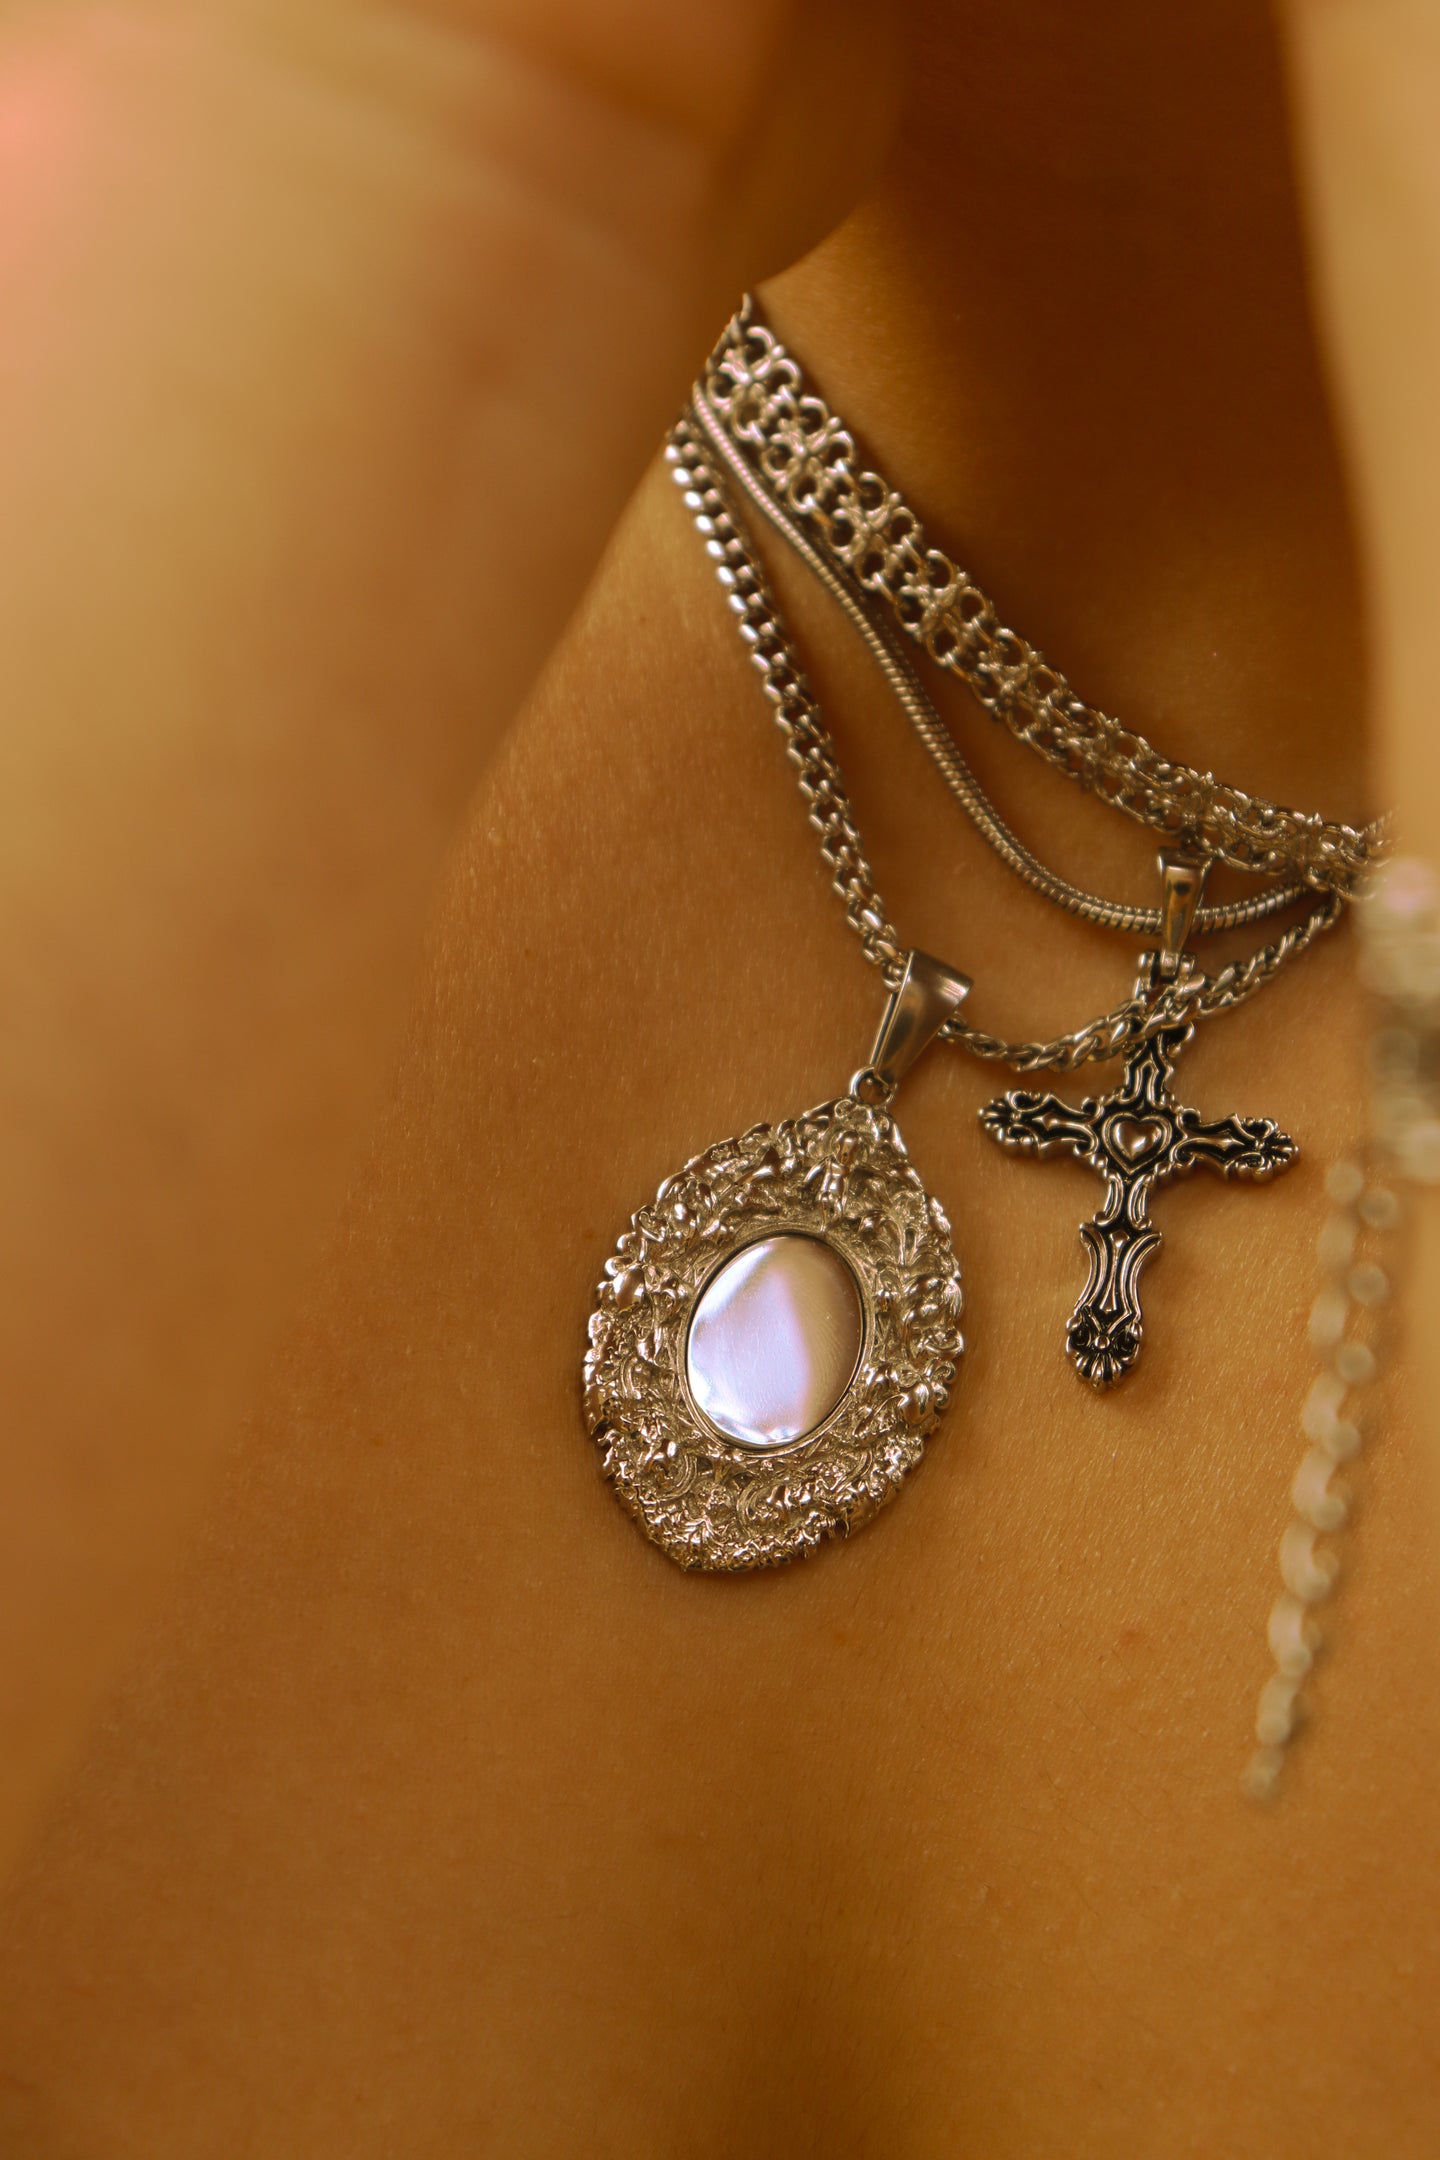 Reflection Oscura Necklace - Fashion Jewelry by Yordy.